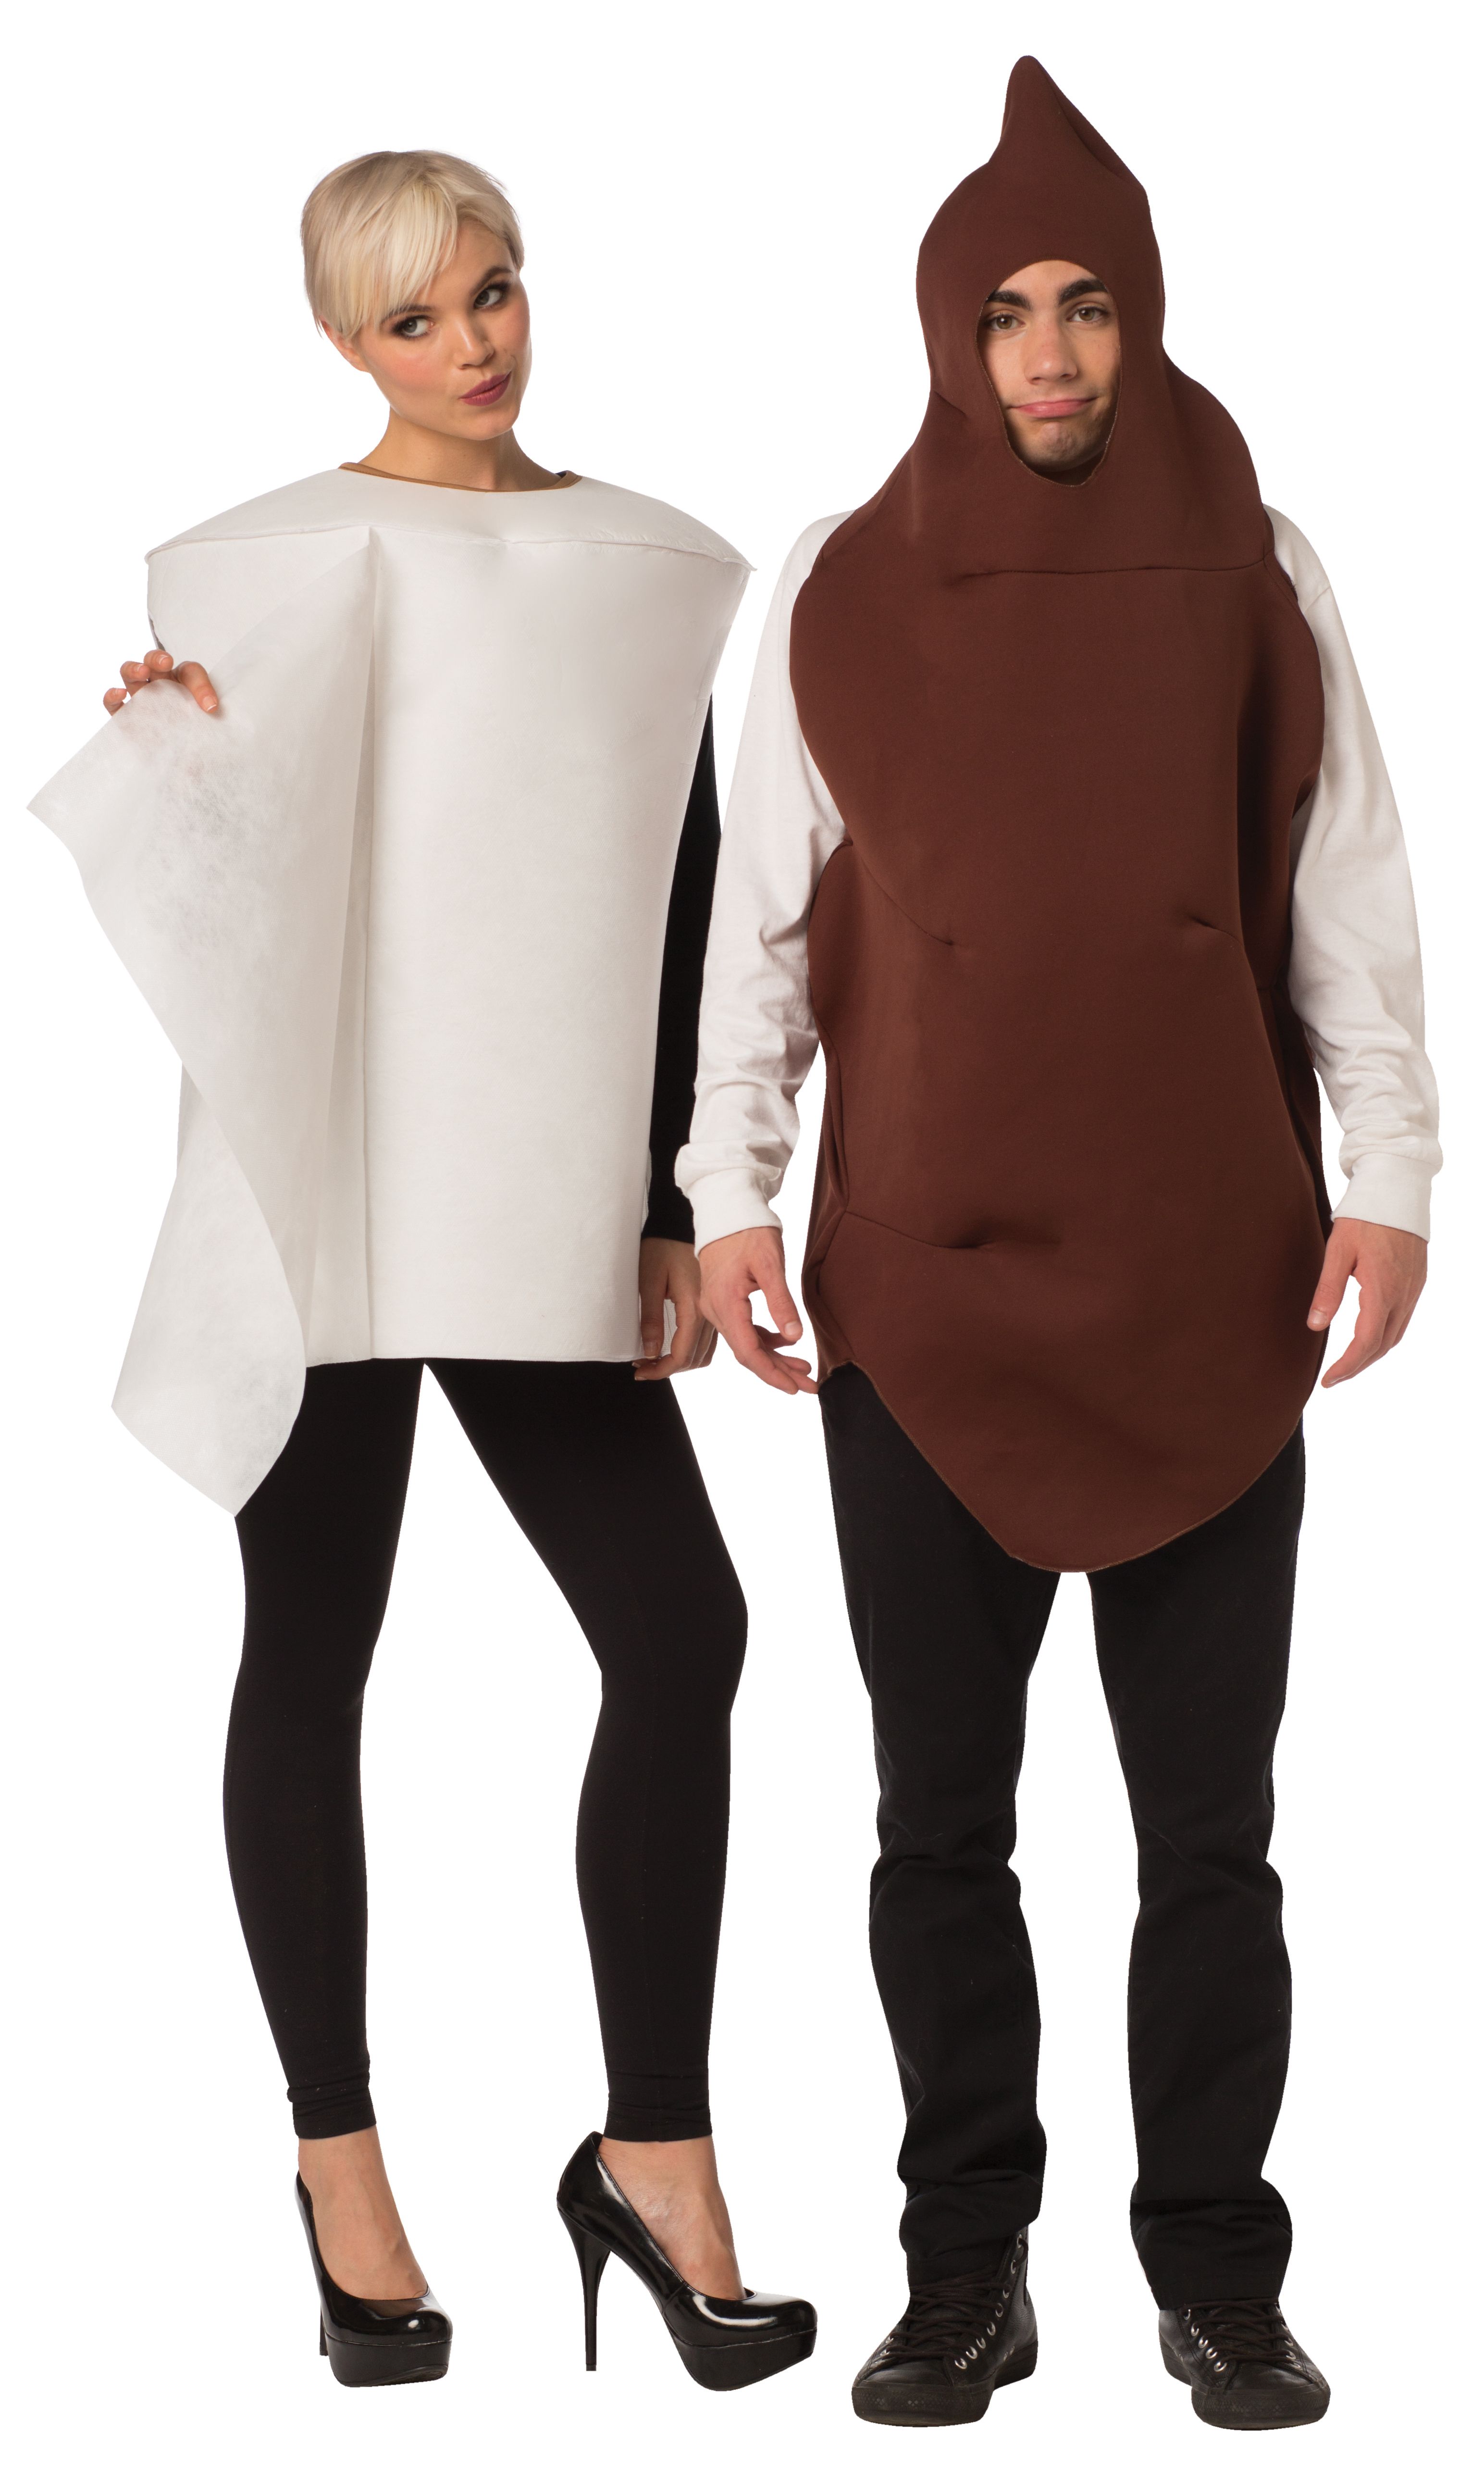 Plus Size Couples Halloween Costume Ideas